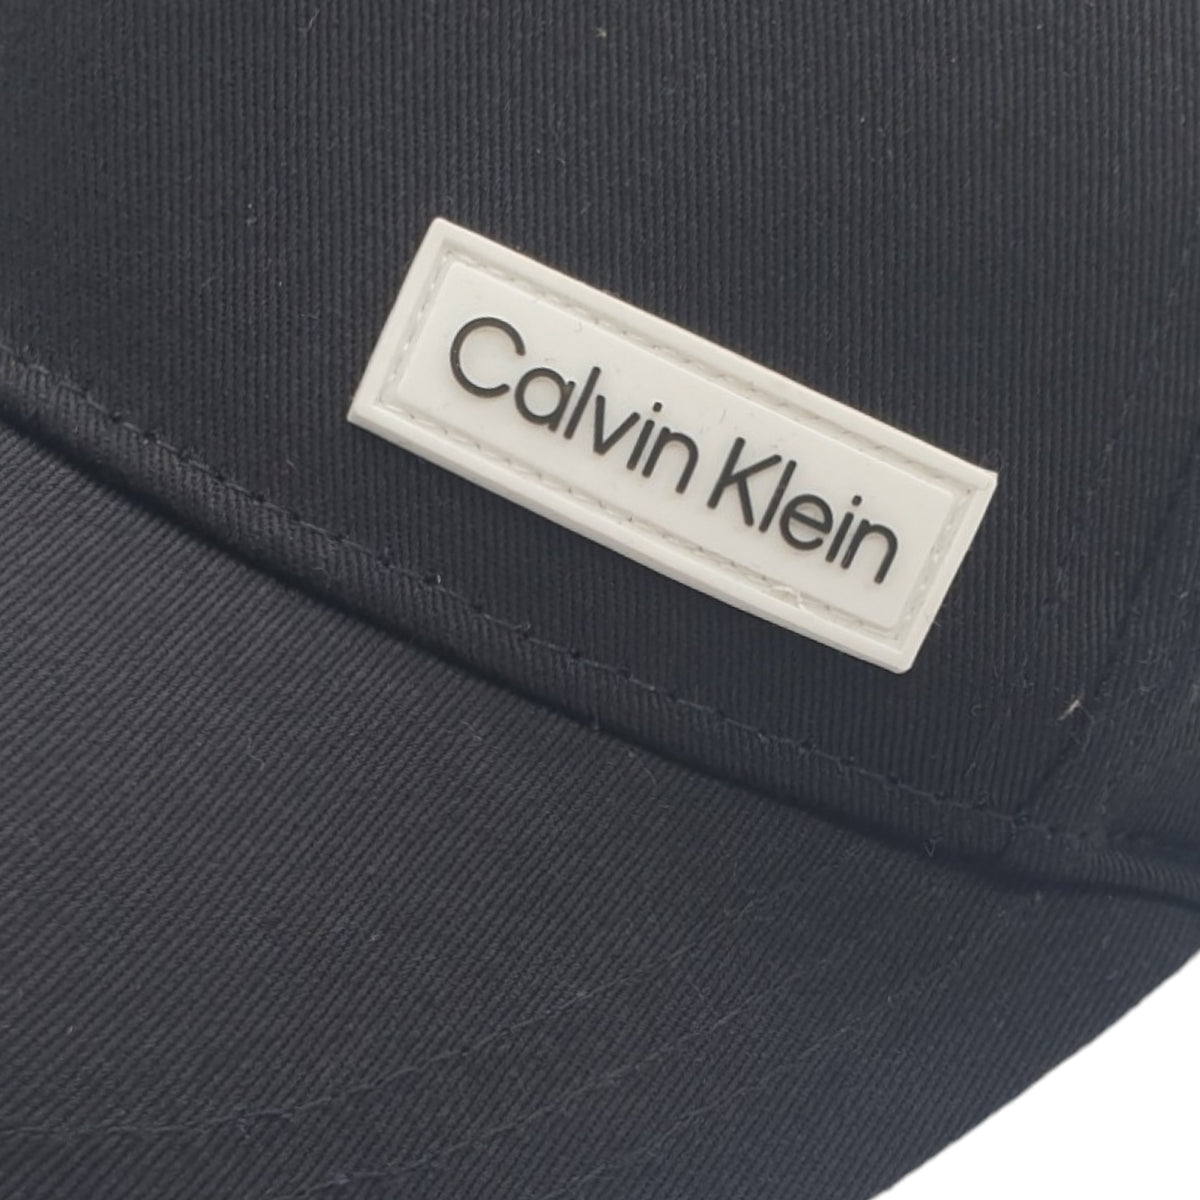 Calvin Klein Black Baseball Hat